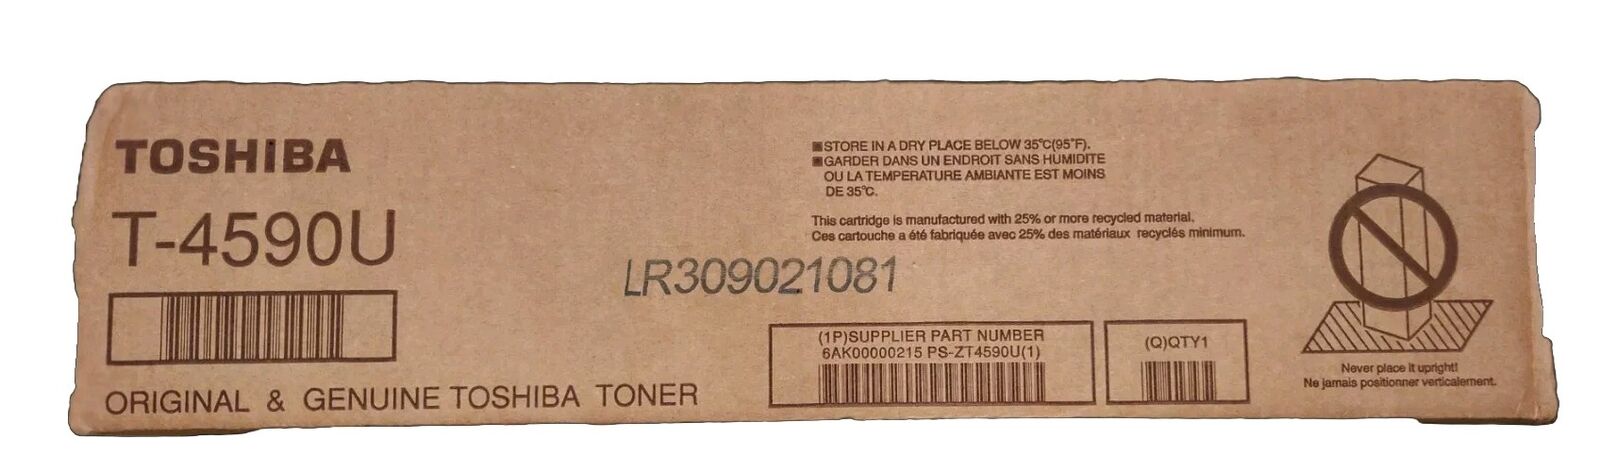 Toshiba T-4590U T4590 Black Toner Cartridge OEM